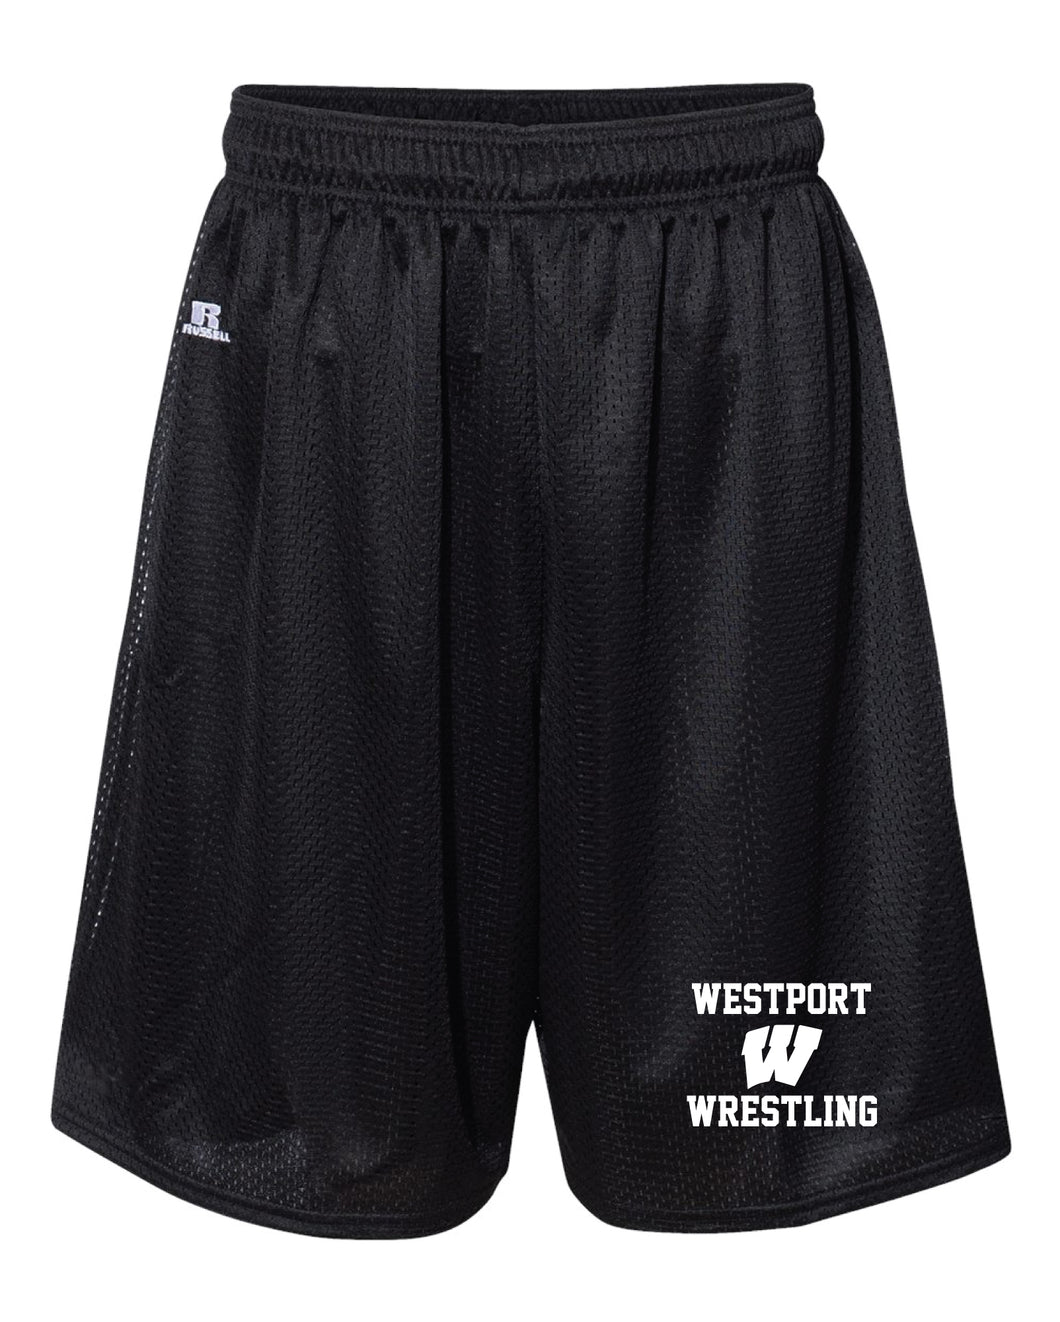 Westport Wreckers Tech Shorts - Black - 5KounT2018